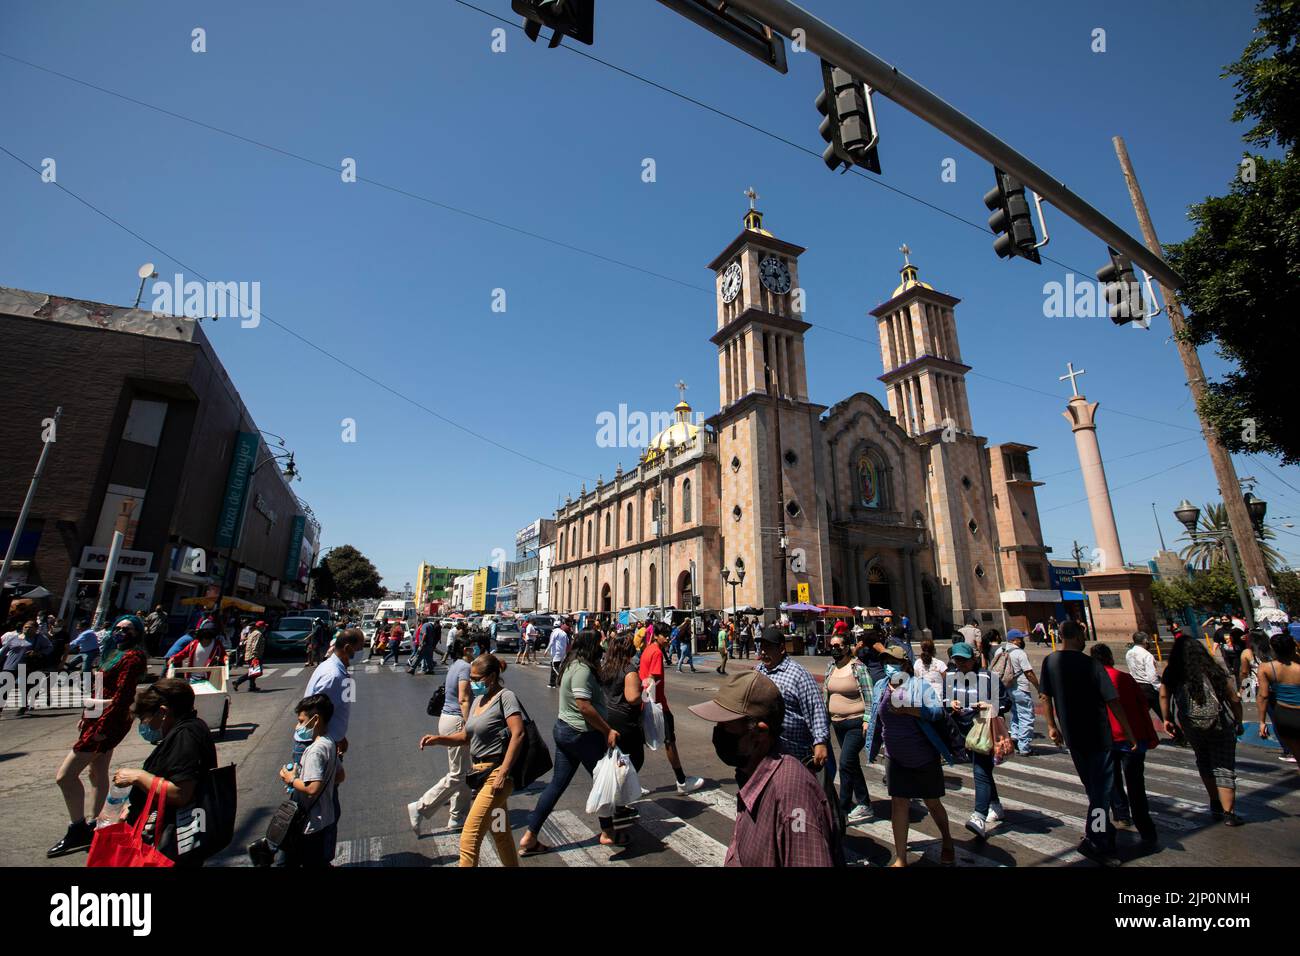 Tijuana, Baja California, Mexico - September 11, 2021: Crowds of people cross a street in downtown Tijuana. Stock Photo